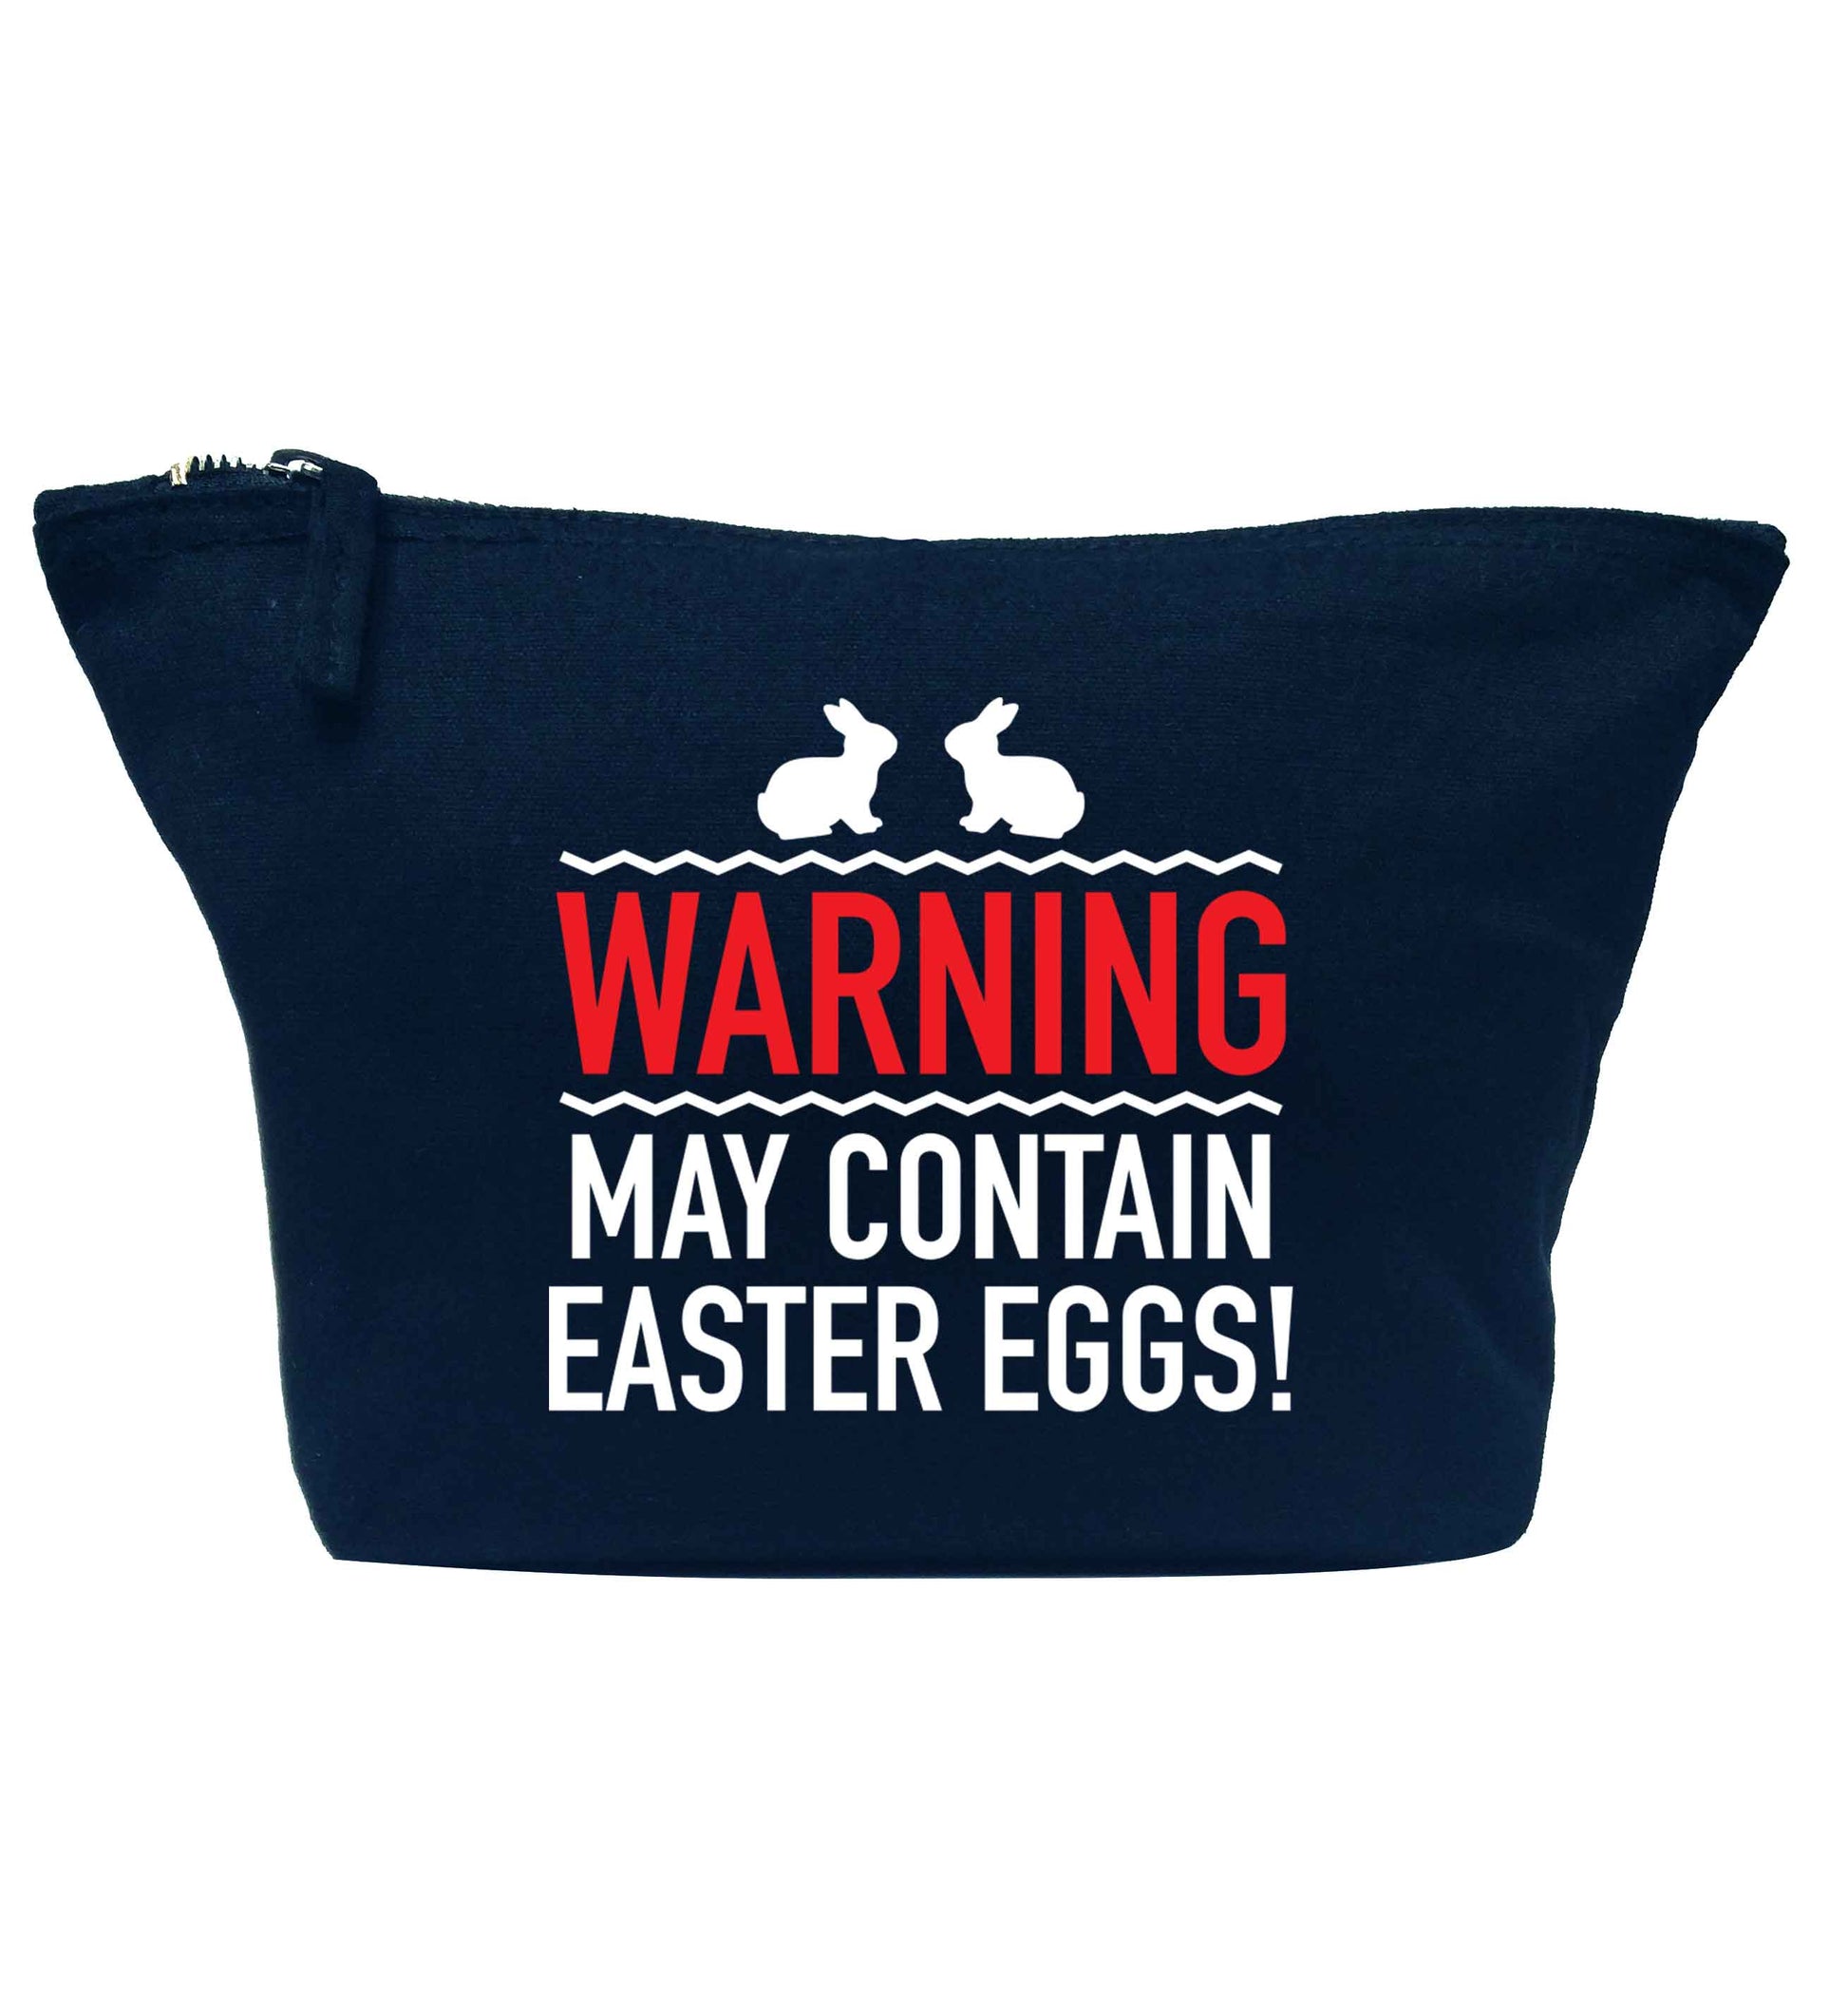 Warning may contain Easter eggs navy makeup bag